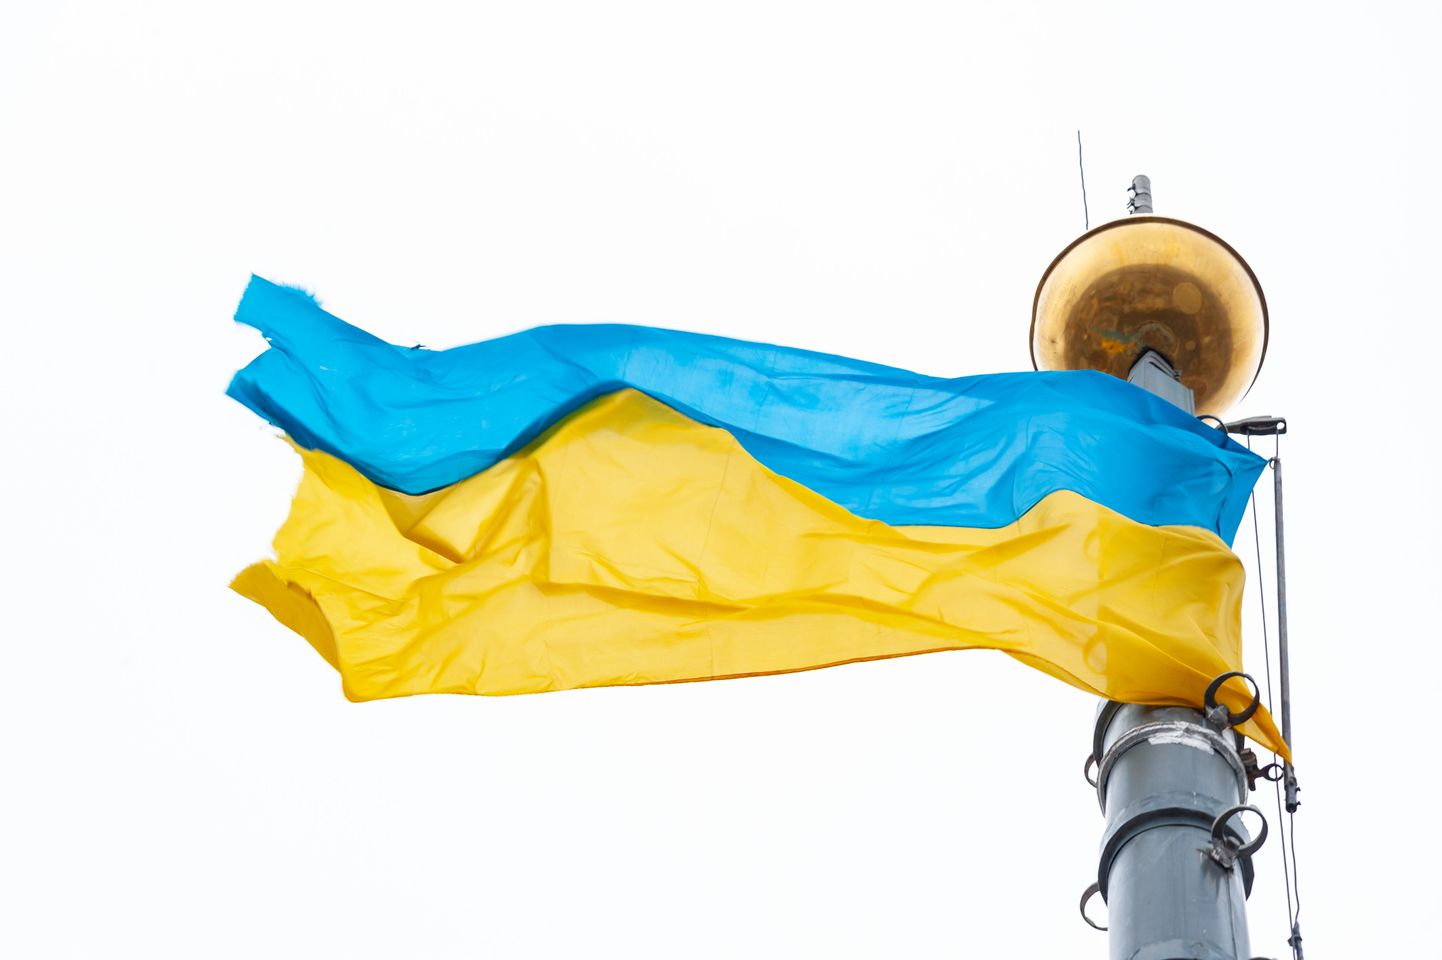 Украинский флаг.